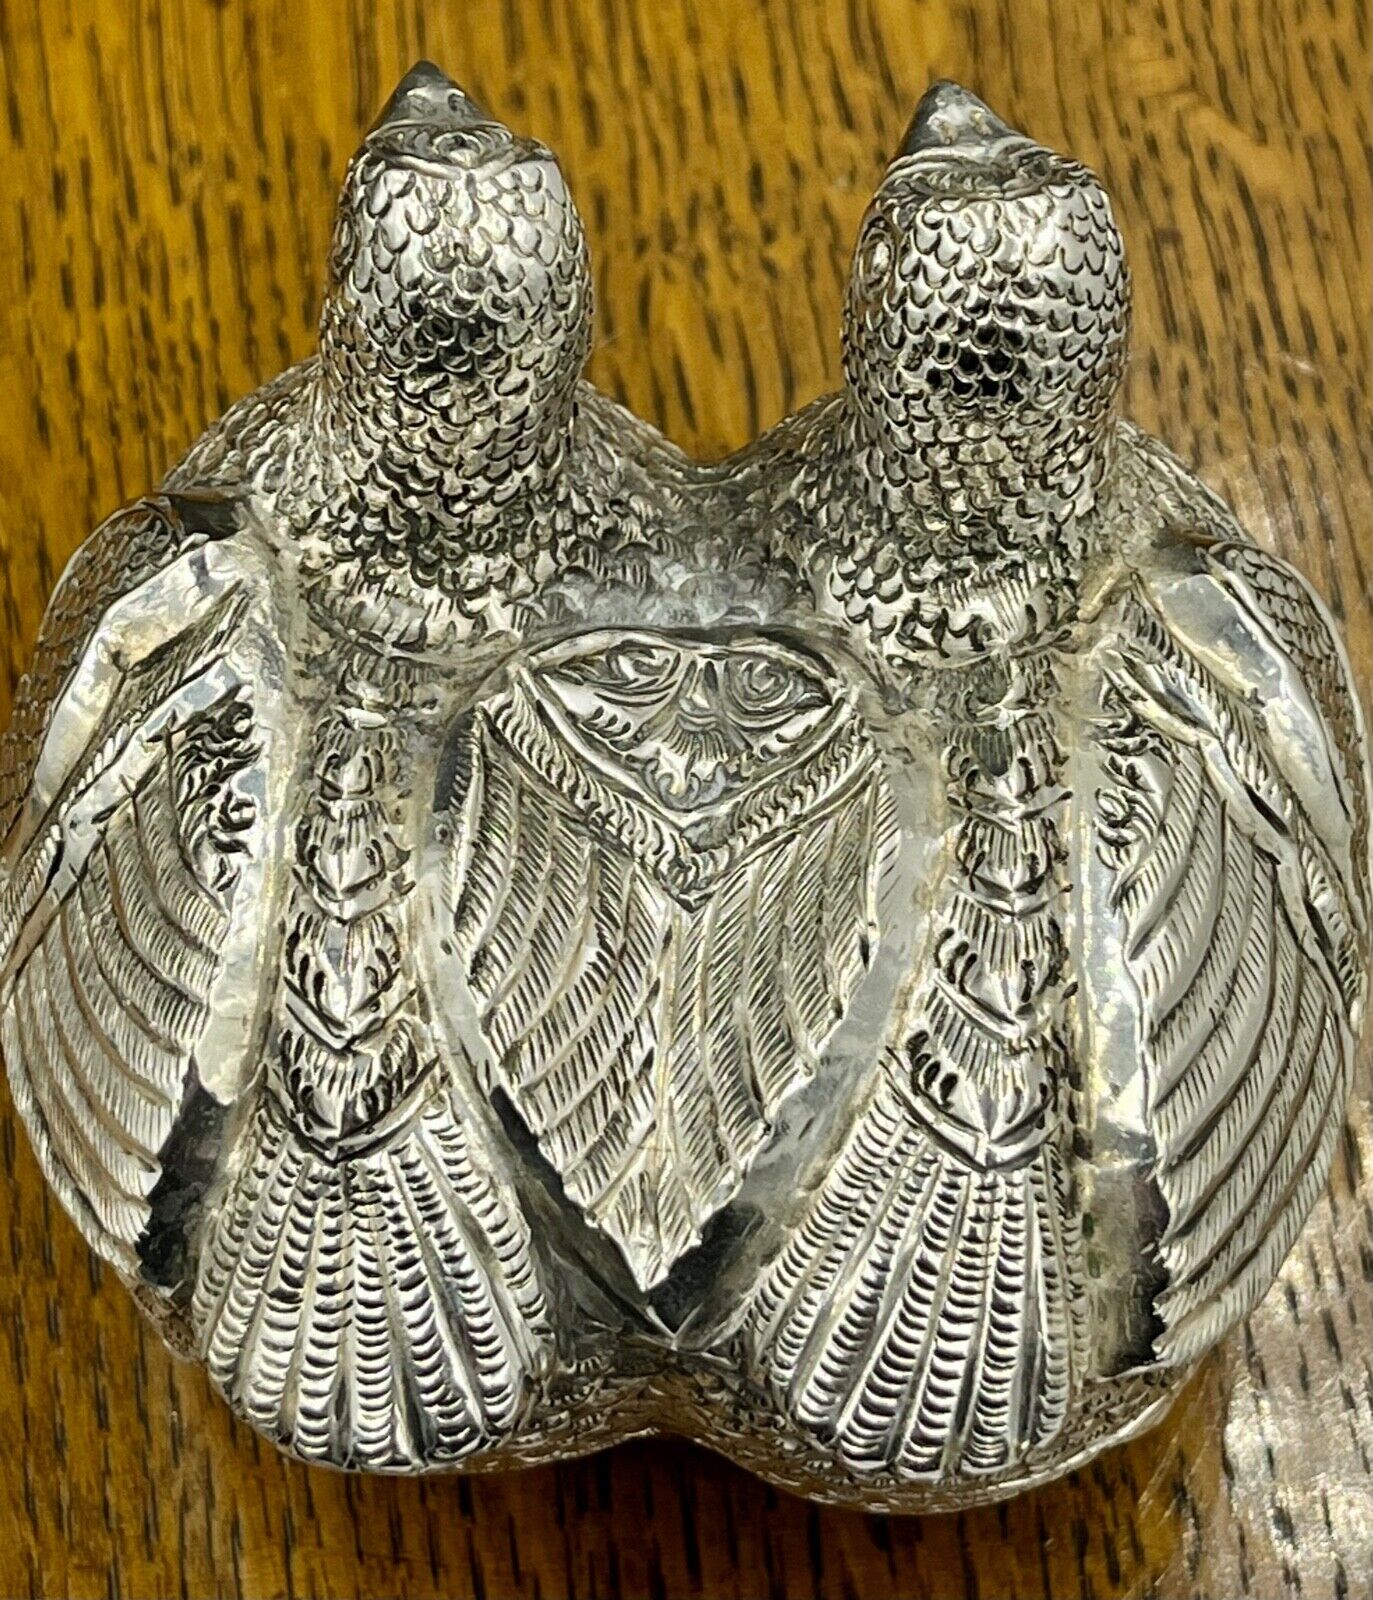 A Cambodian silver betel nut box 2 birds sitting T90